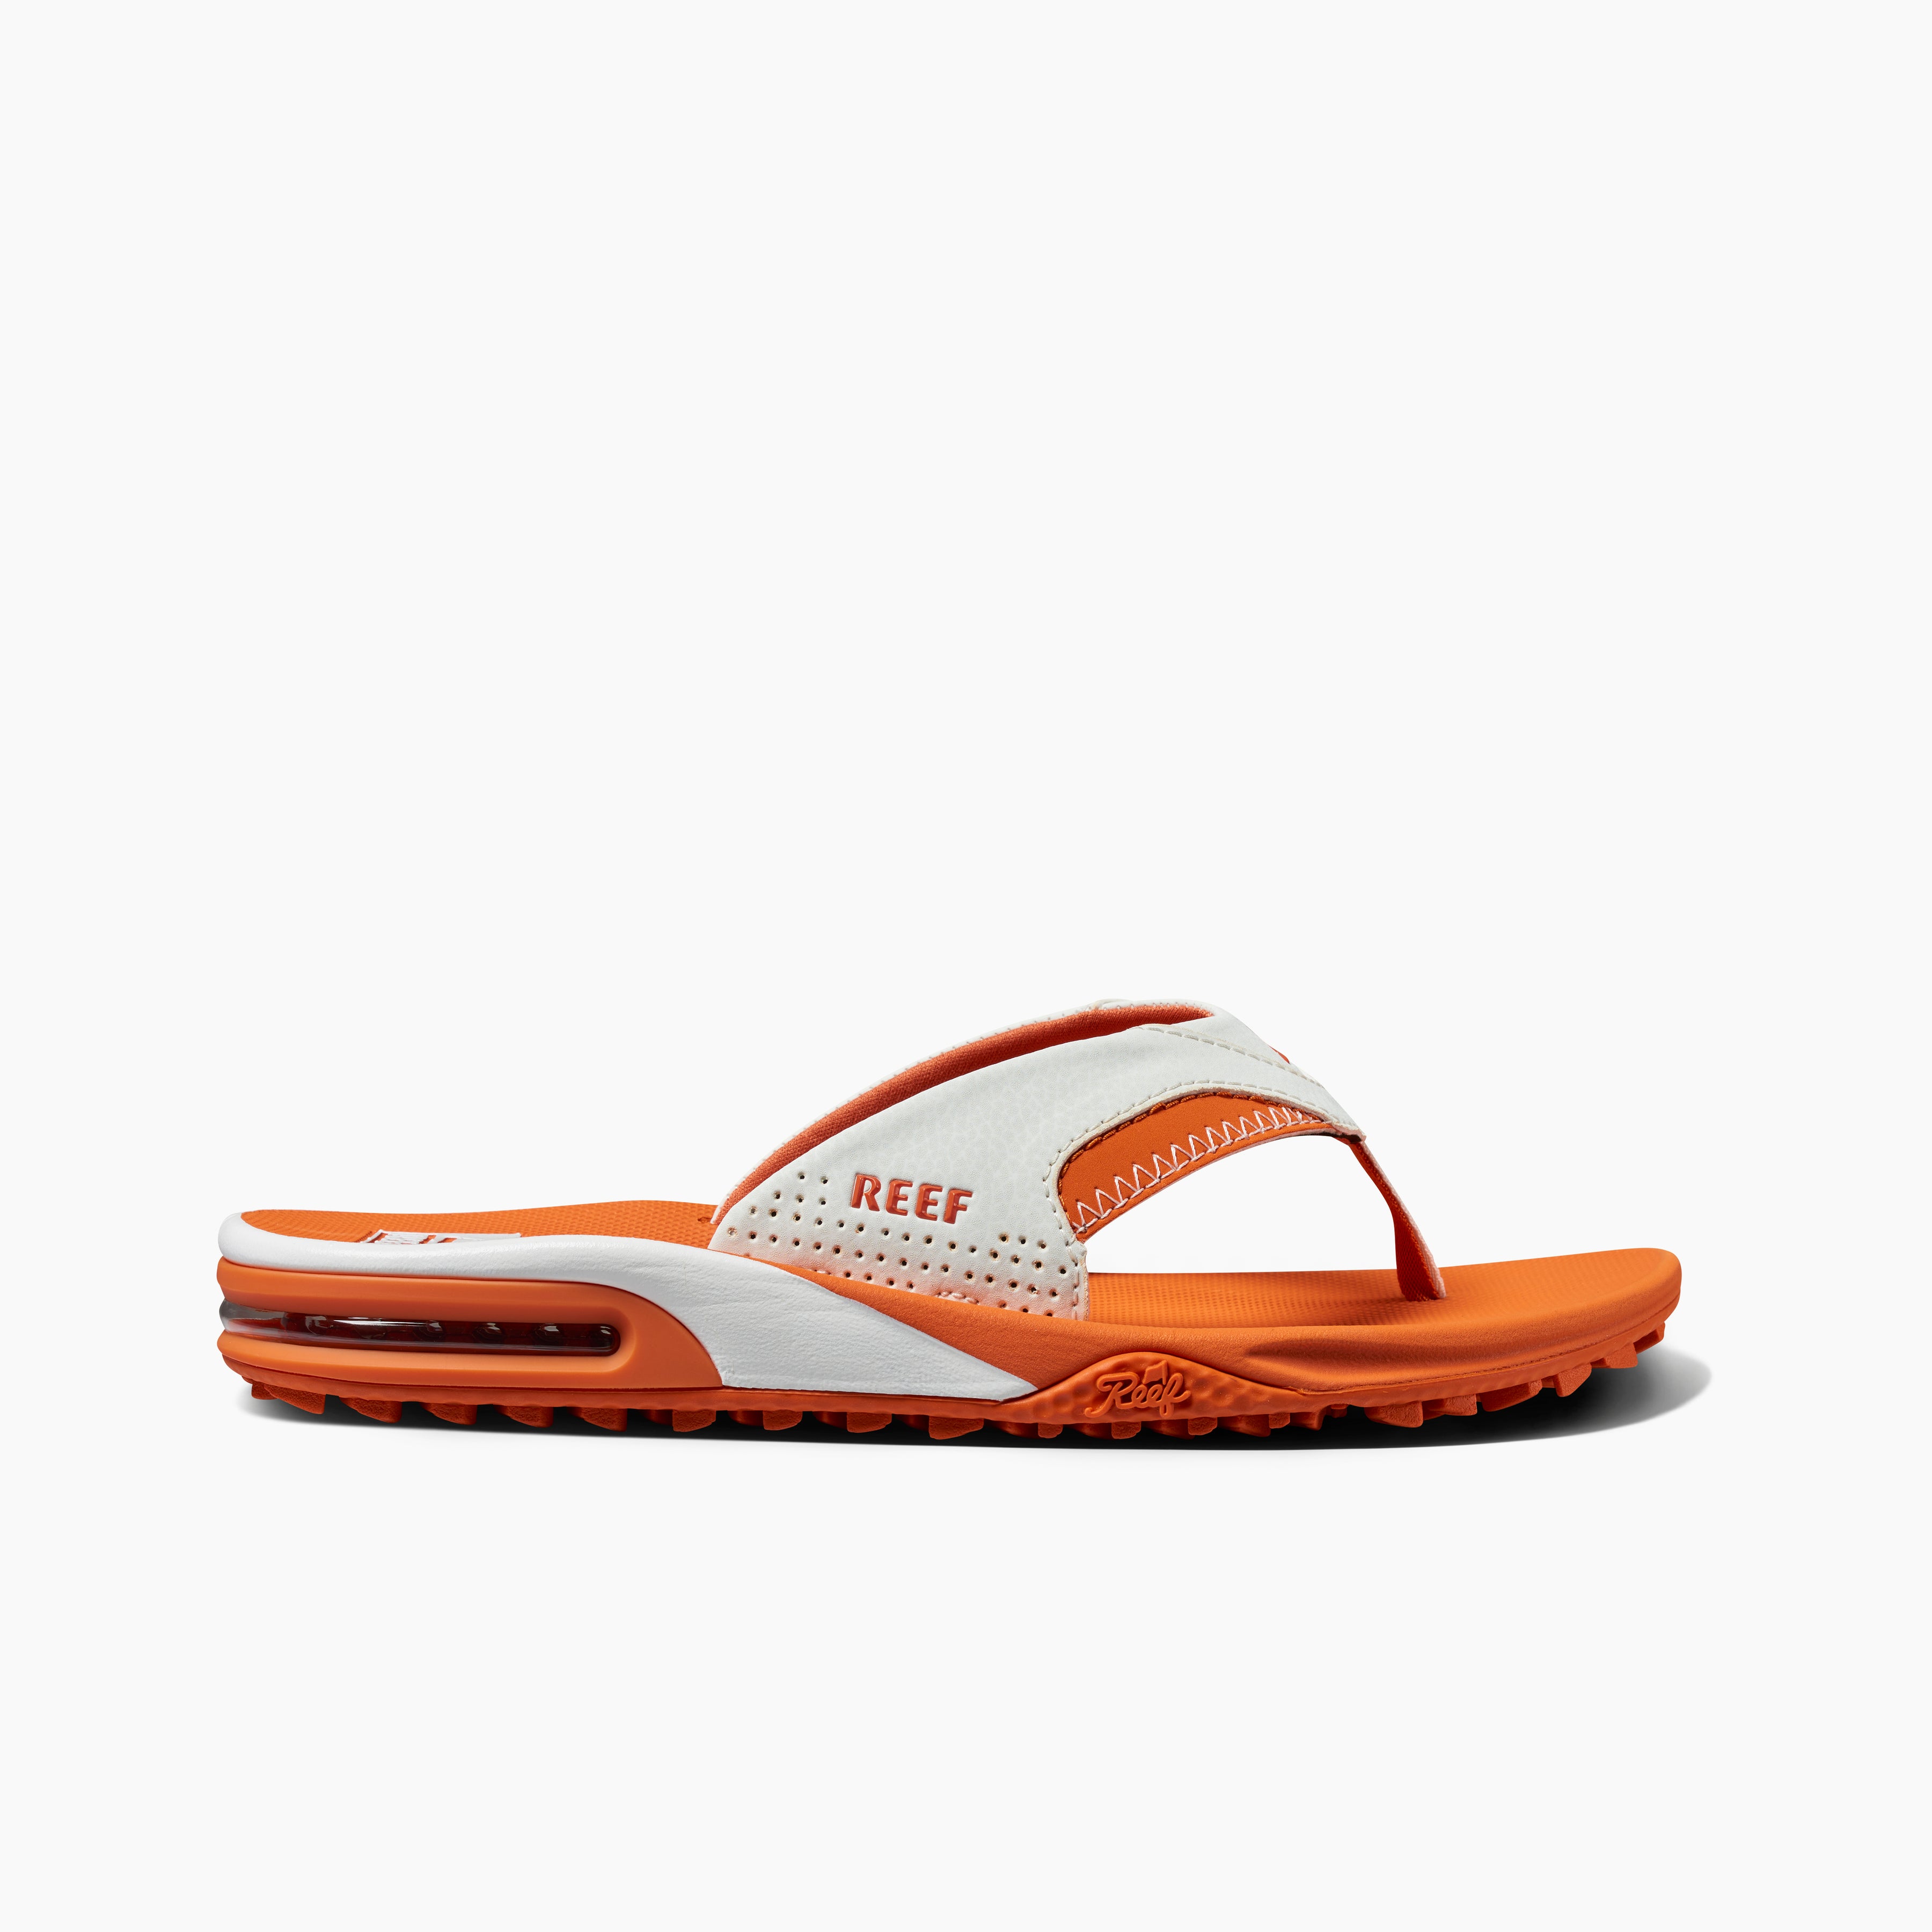 Men's Sandals: Casual Beach Sandals for Summer